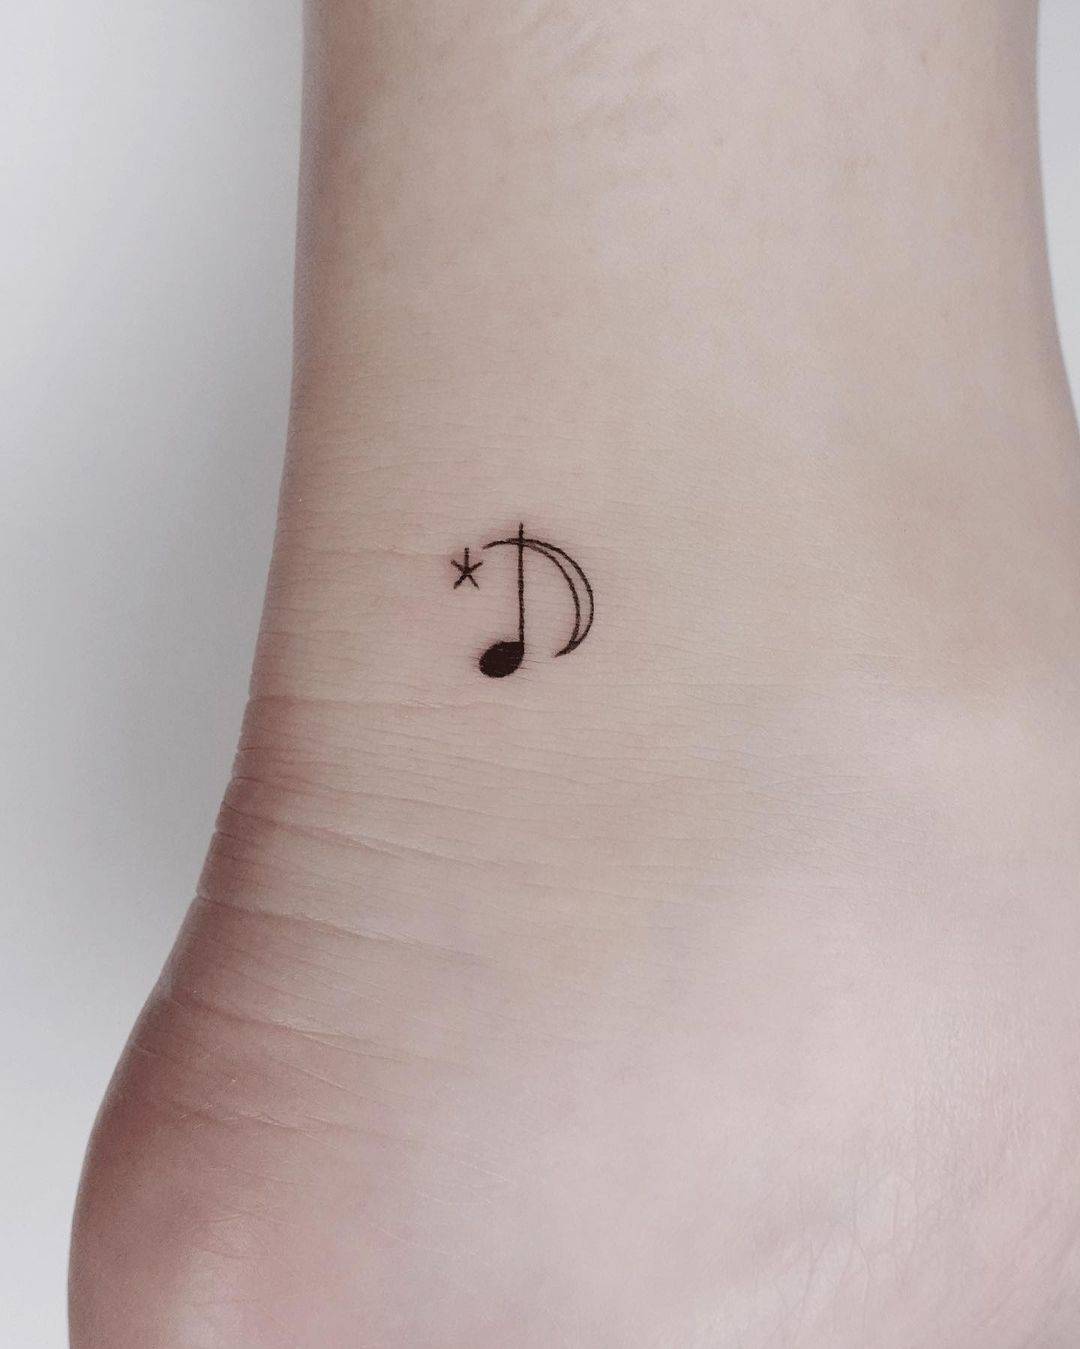 Music note tattoo by nieun tat2